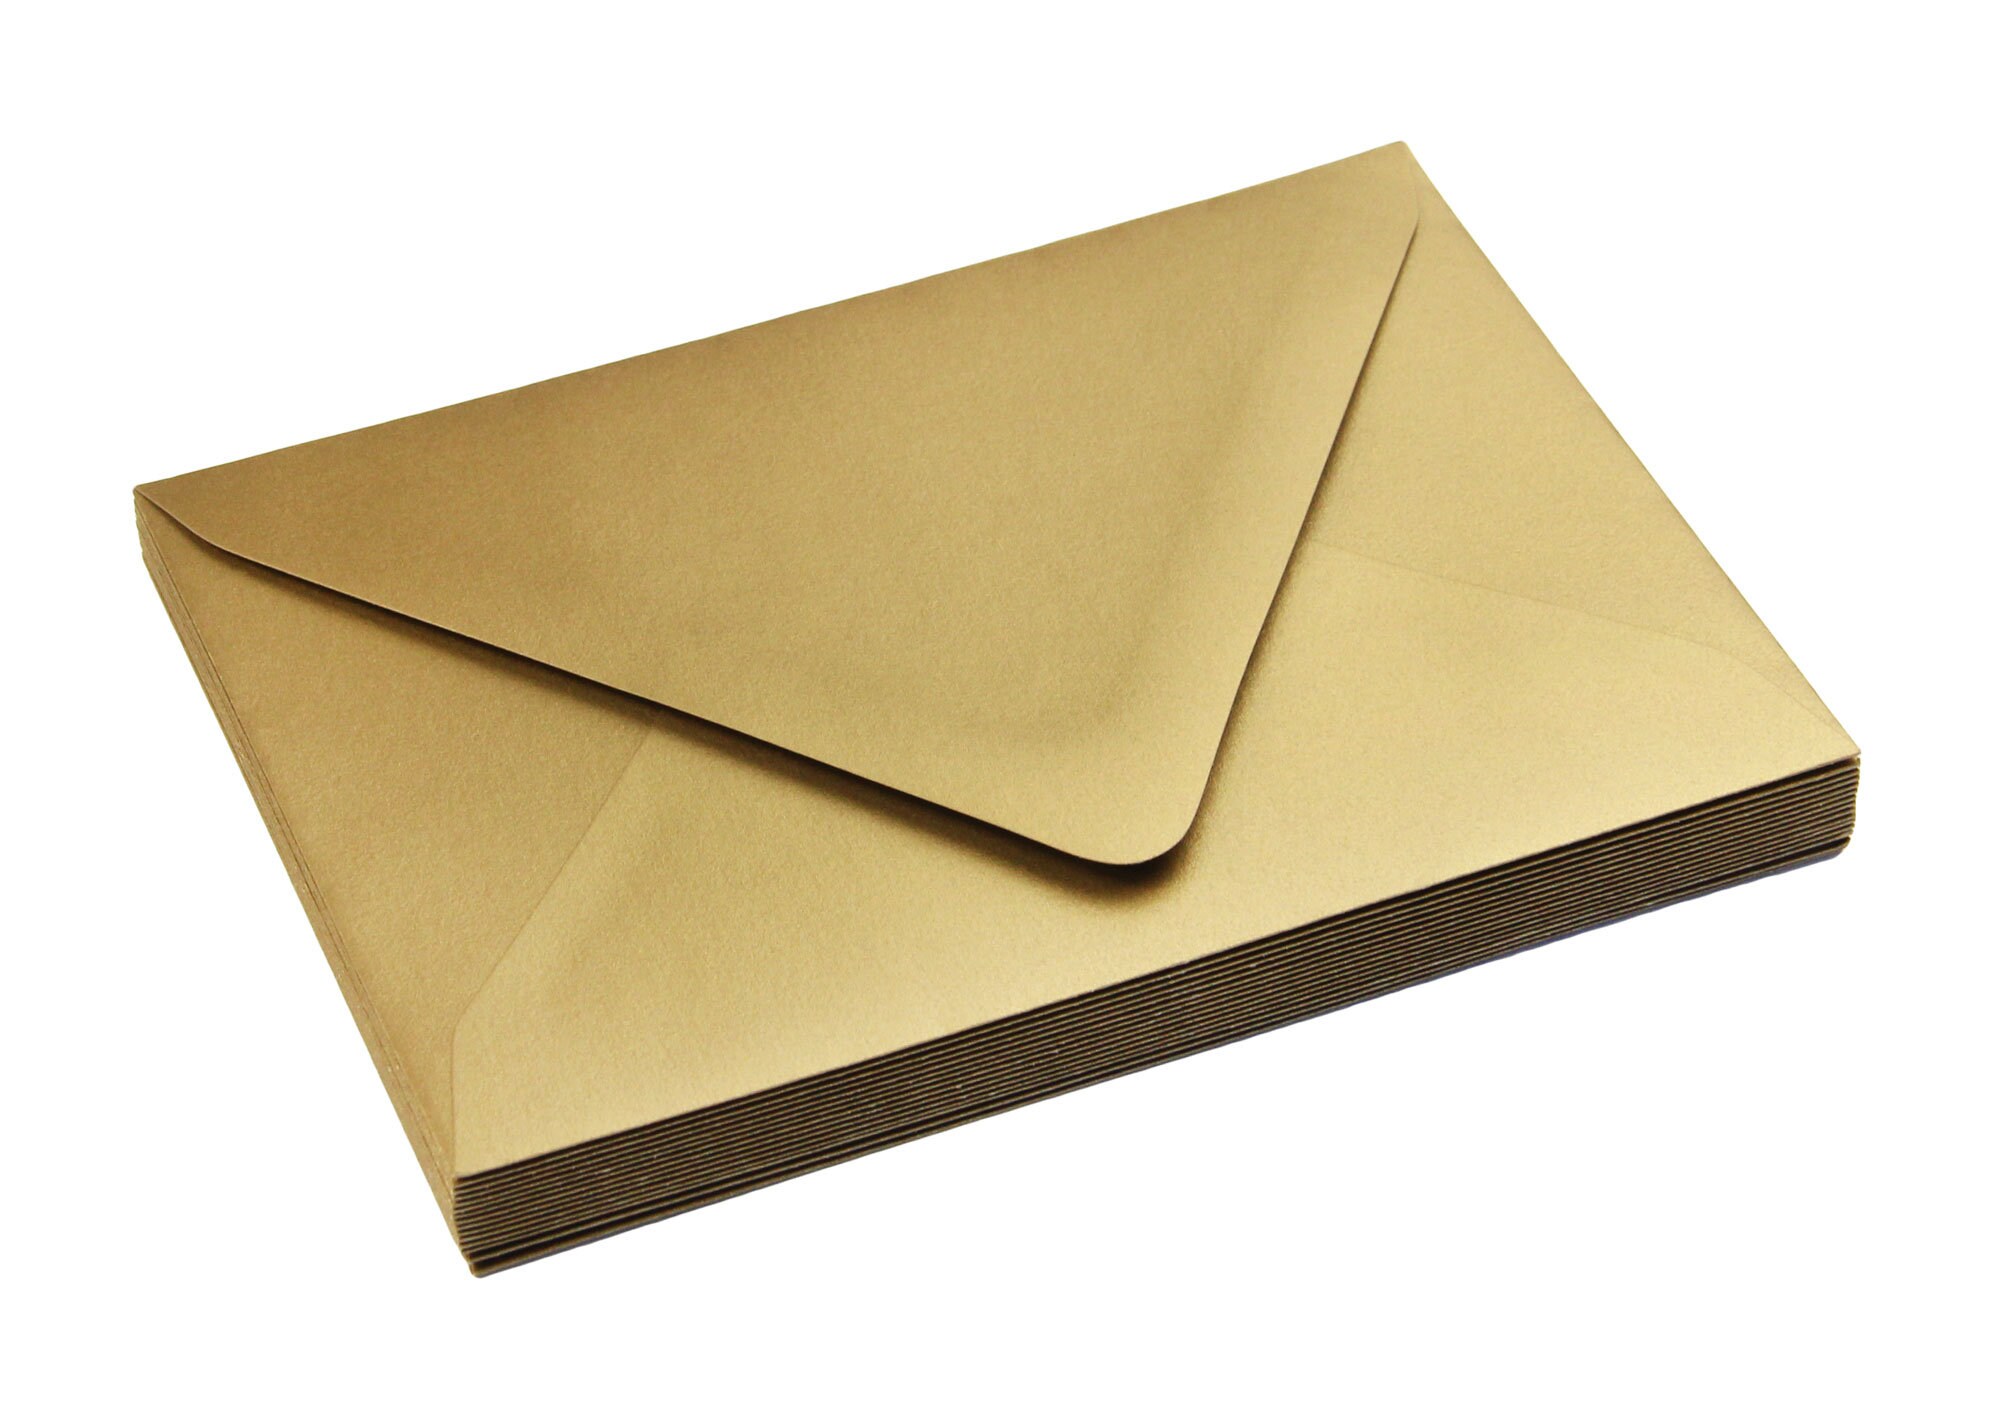 A9 euro flap envelopes